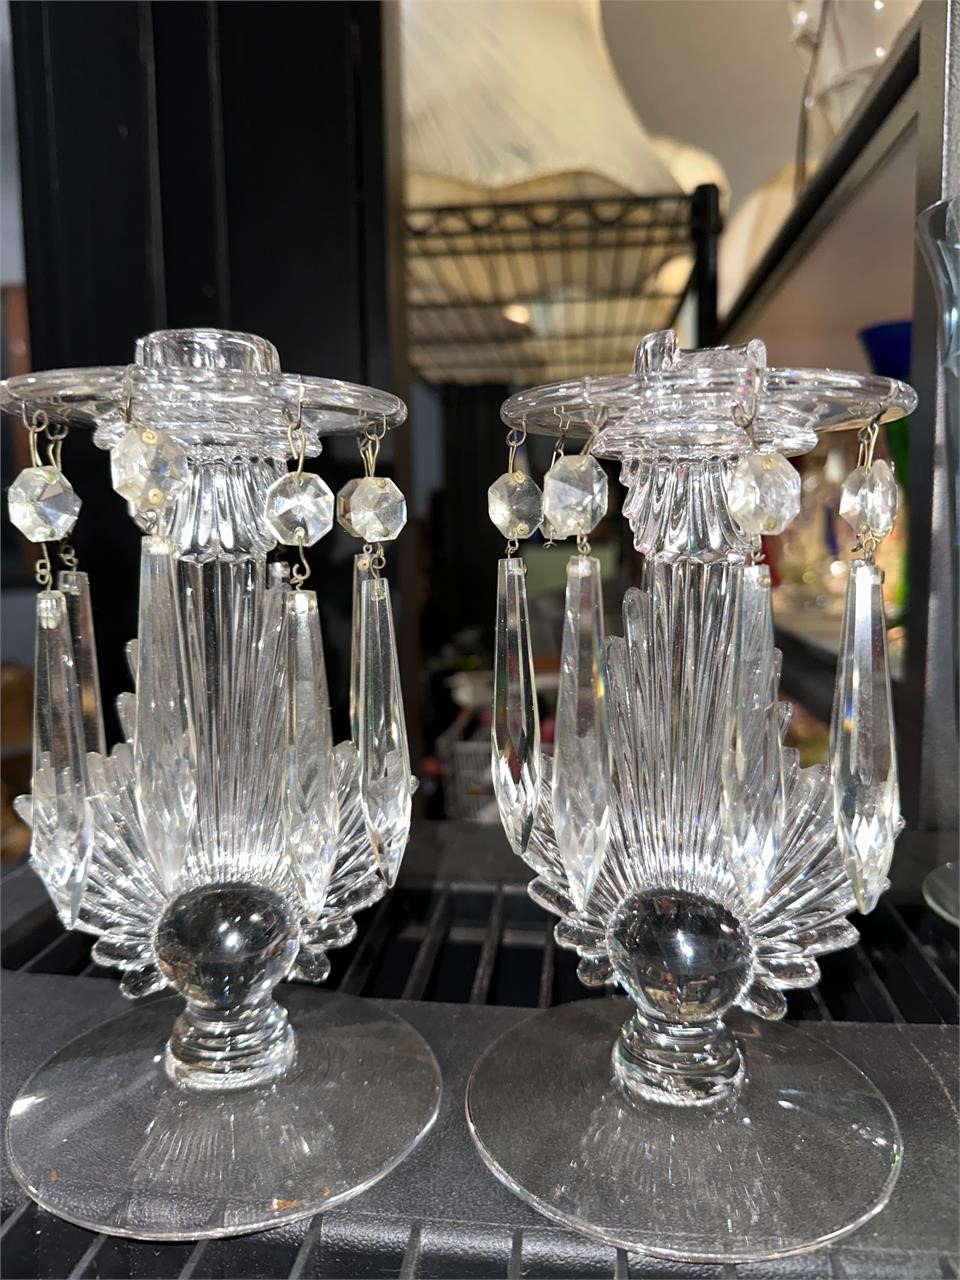 Vintage glass candlestick holders